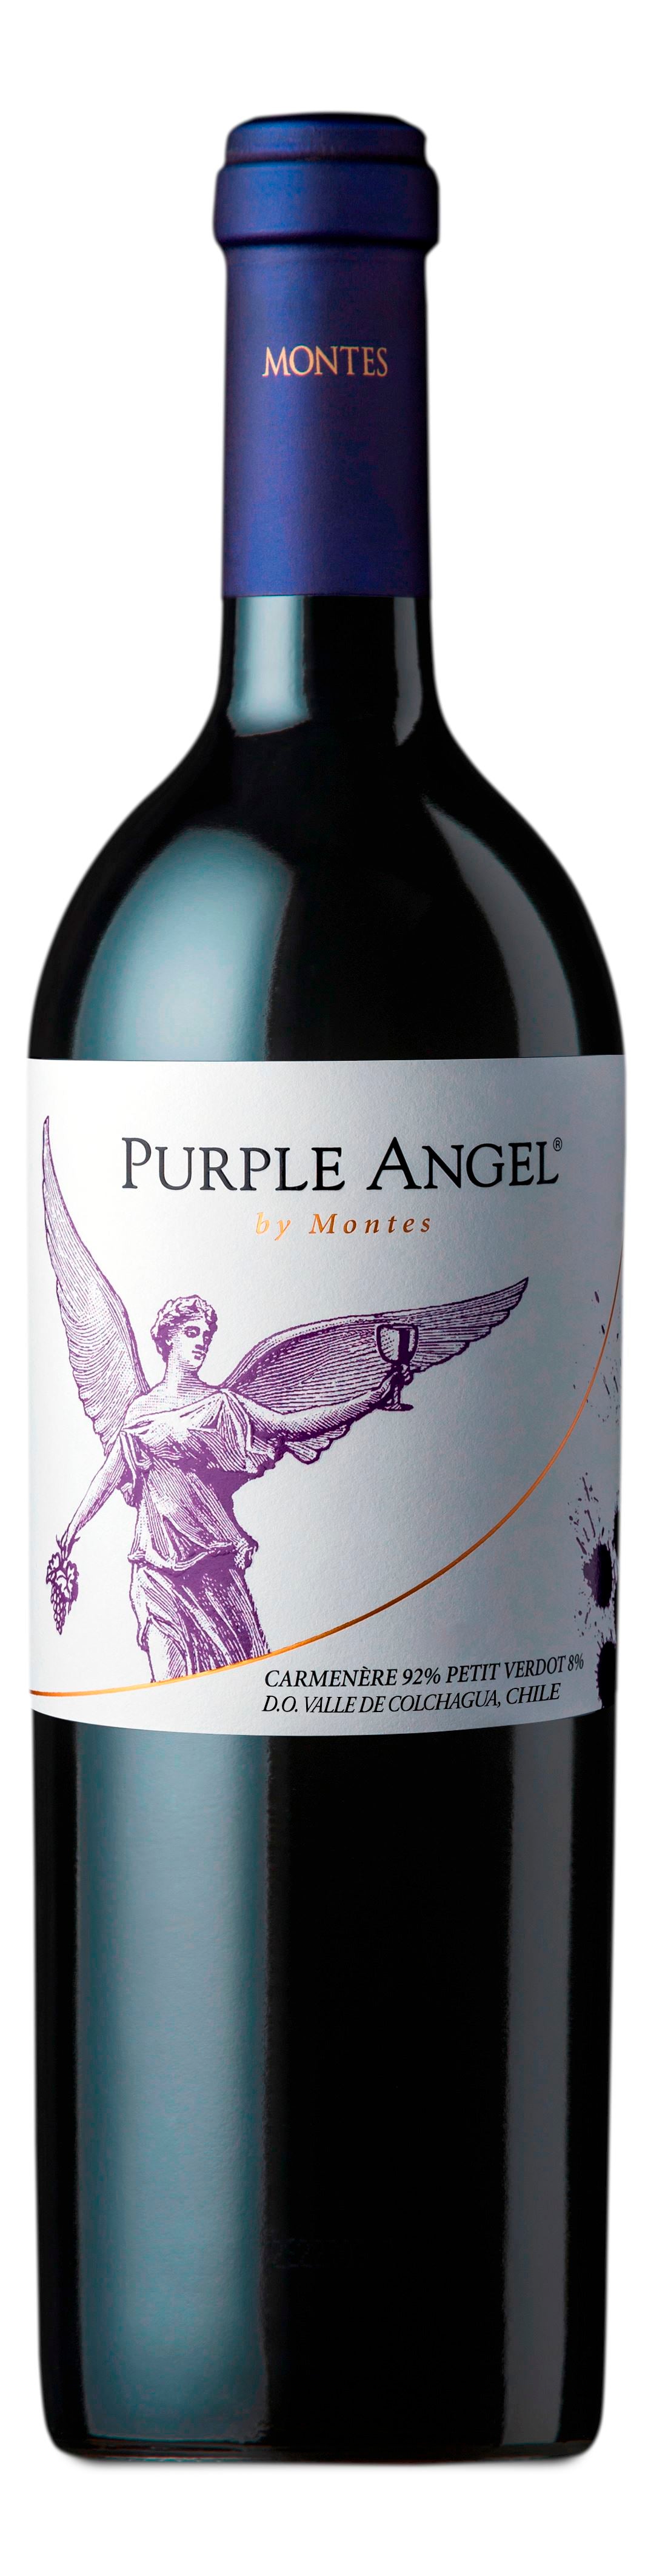 Montes, `Purple Angel` Colchagua, Chile, 2019 Wine Bottle Liberty Wines 